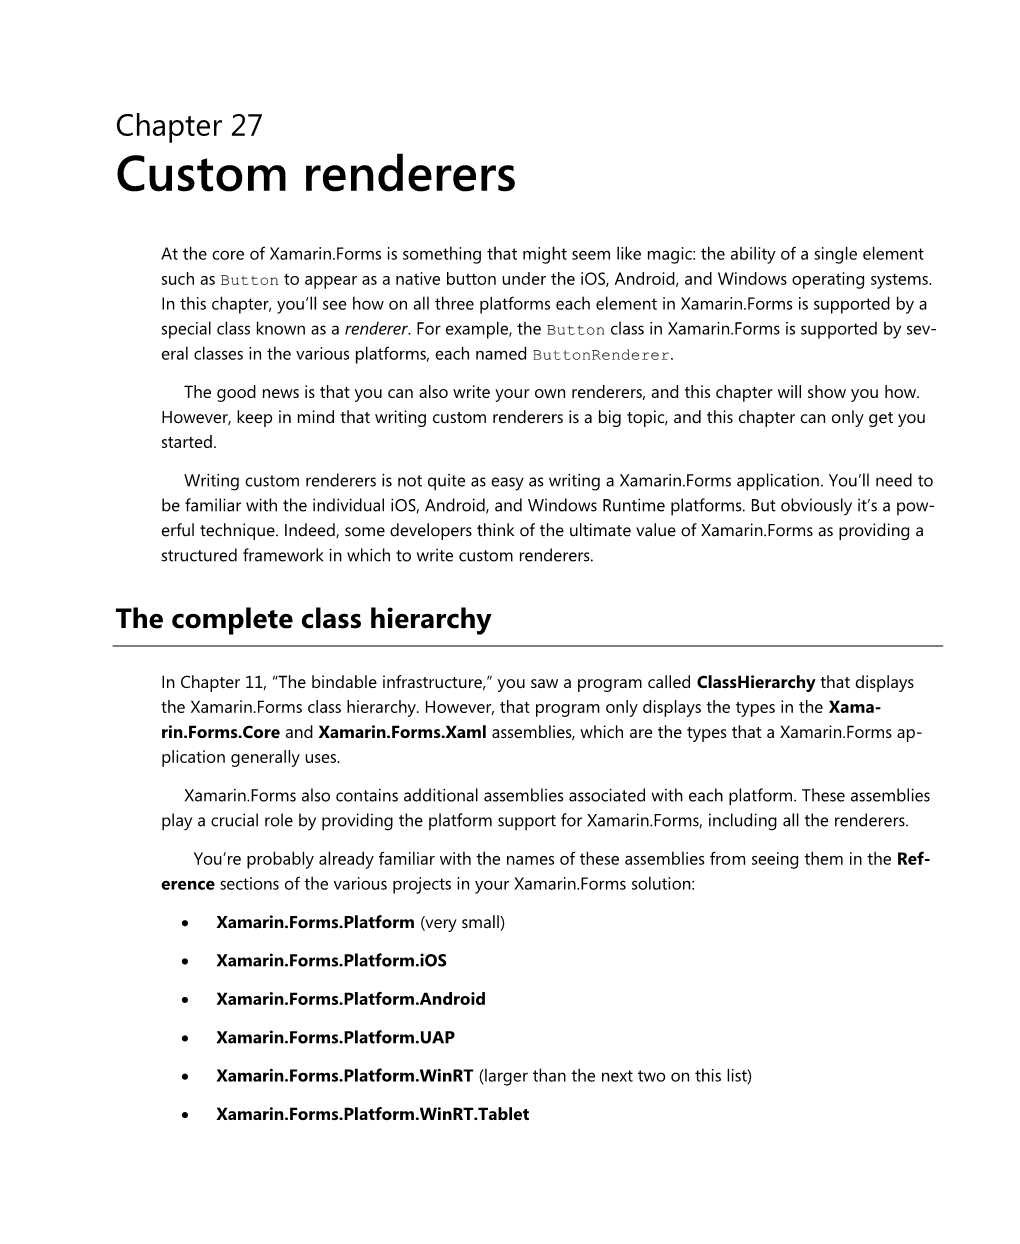 Chapter 27 Custom Renderers